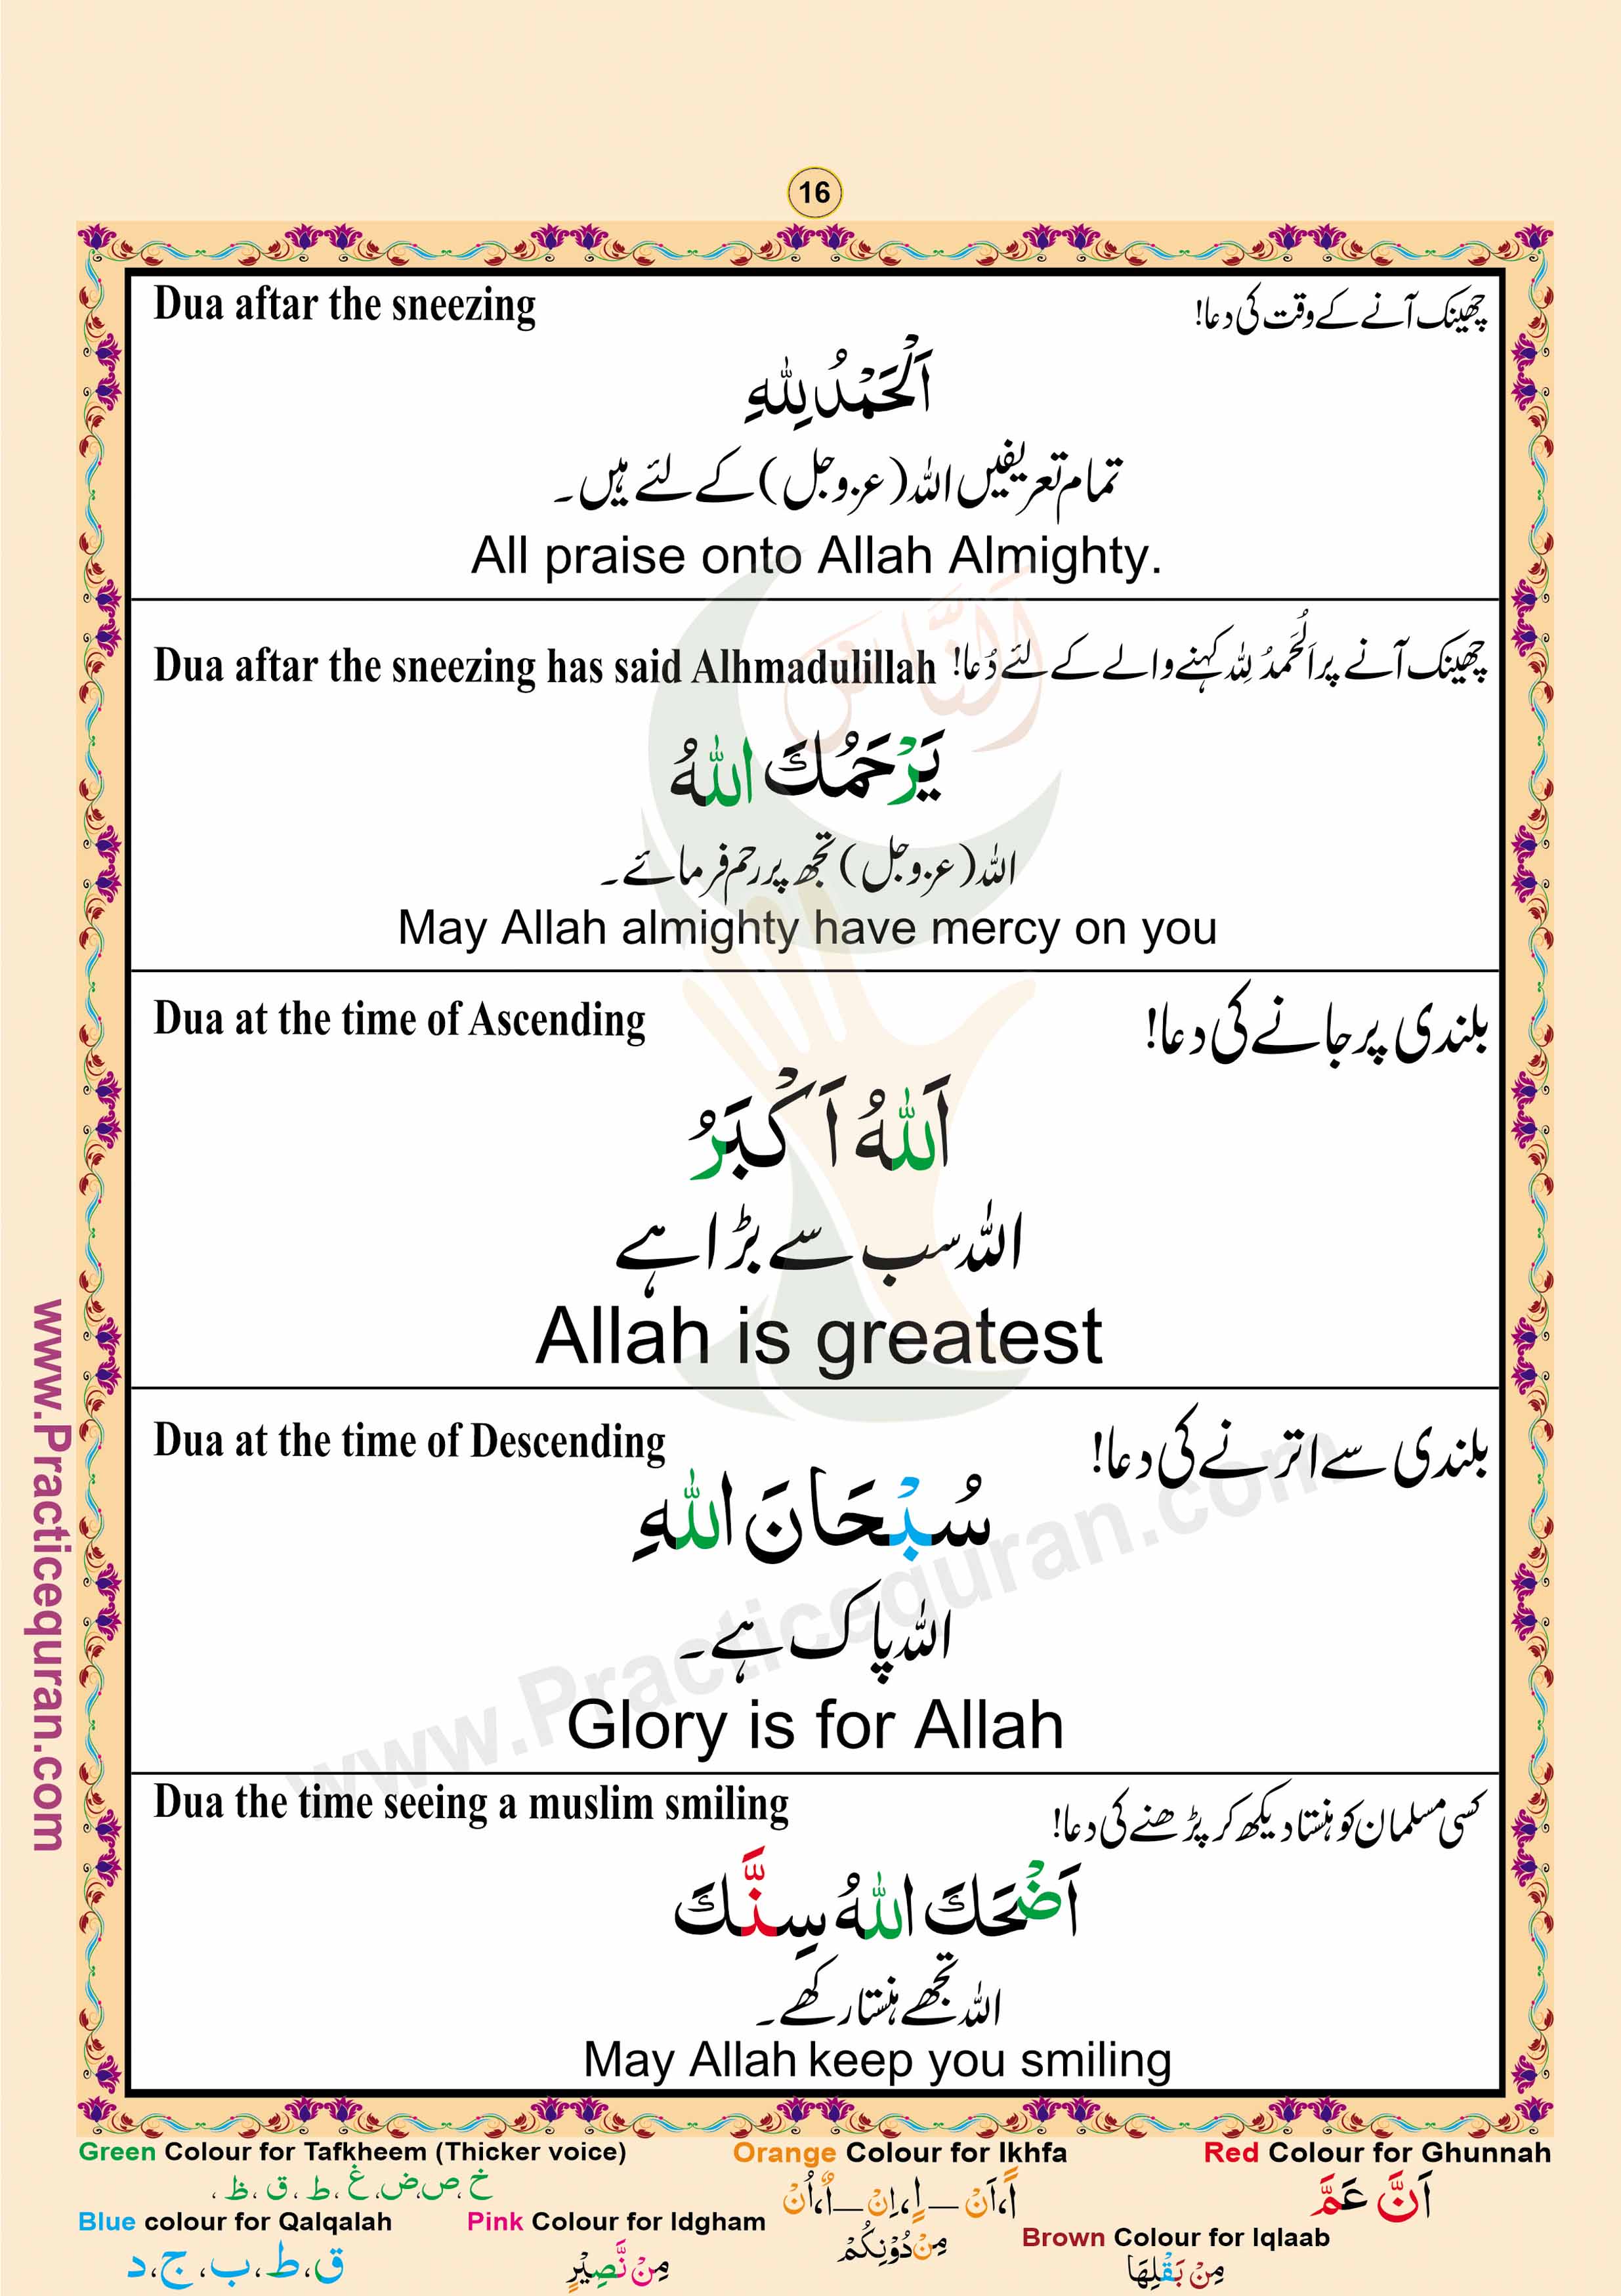 Read Namaz (Salah) Page No 16, Practice Quran